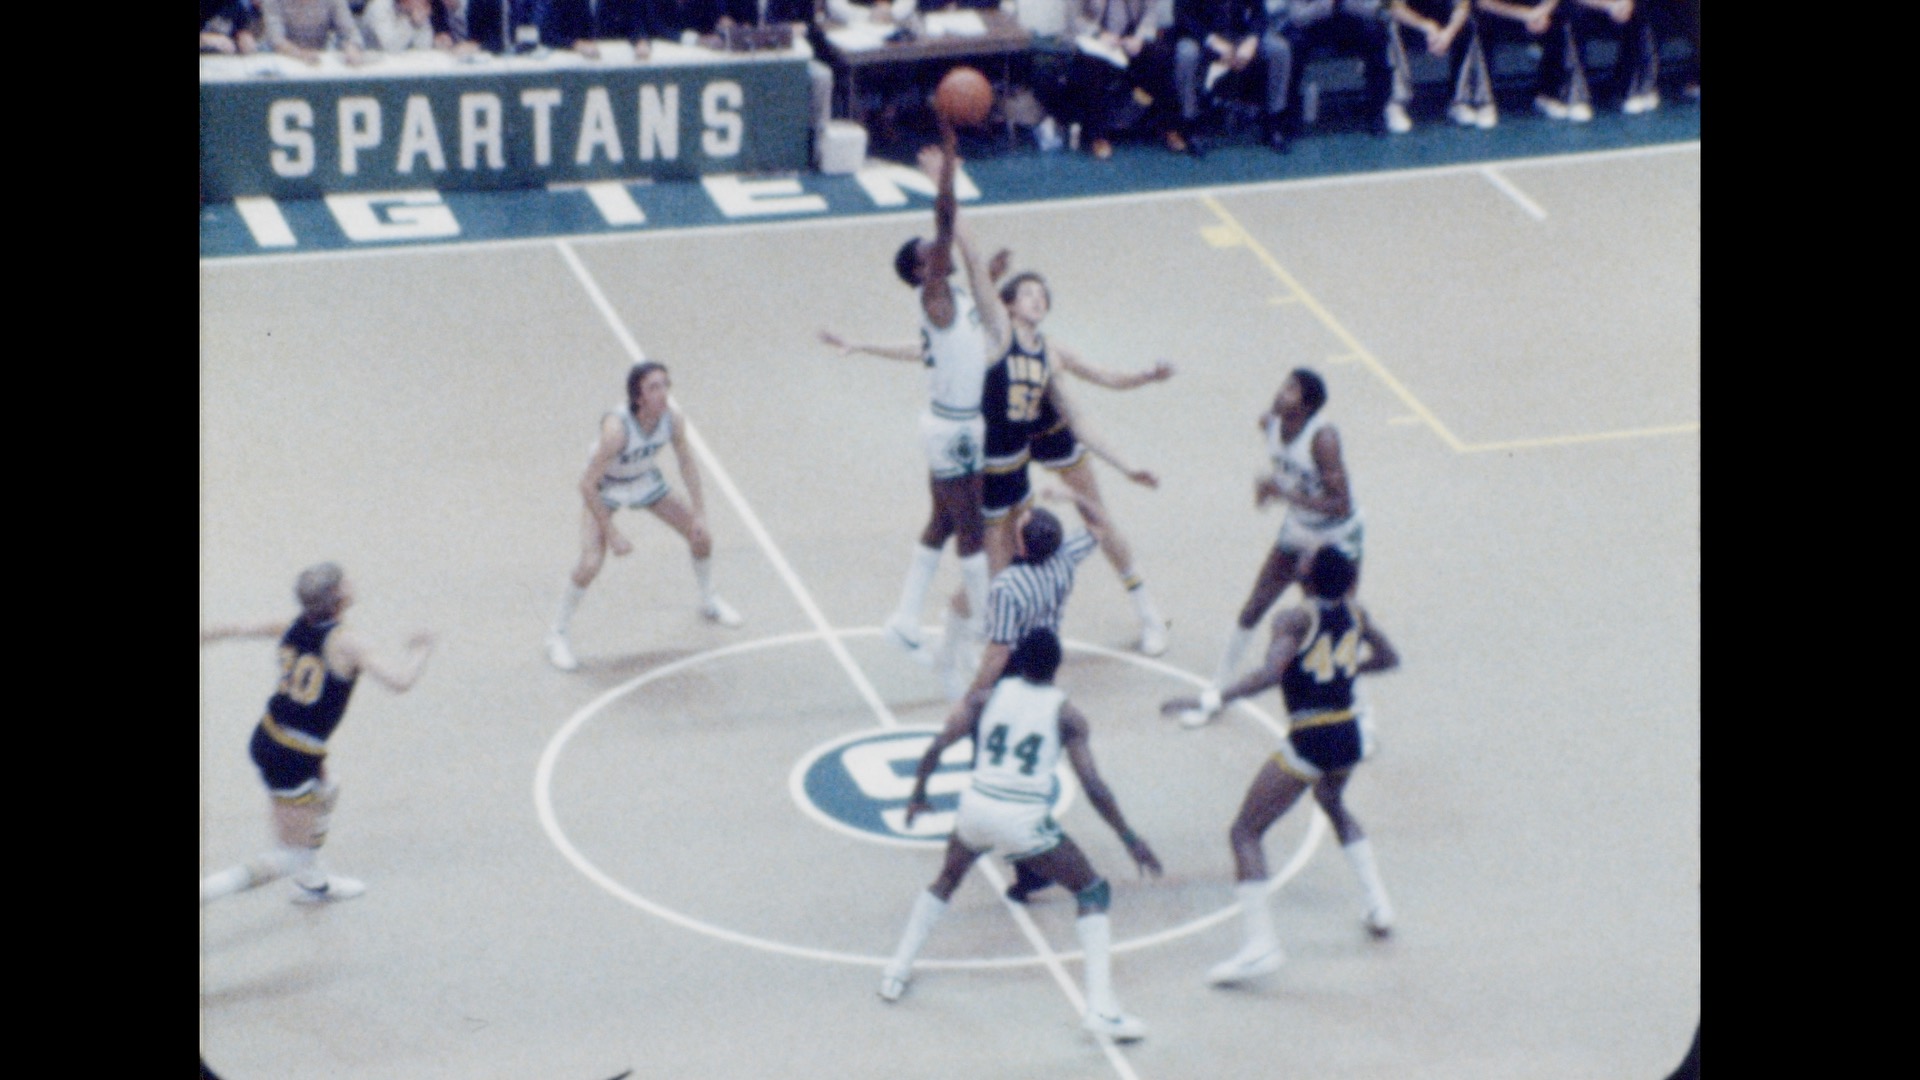 MSU Basketball vs. Iowa (home), 1978